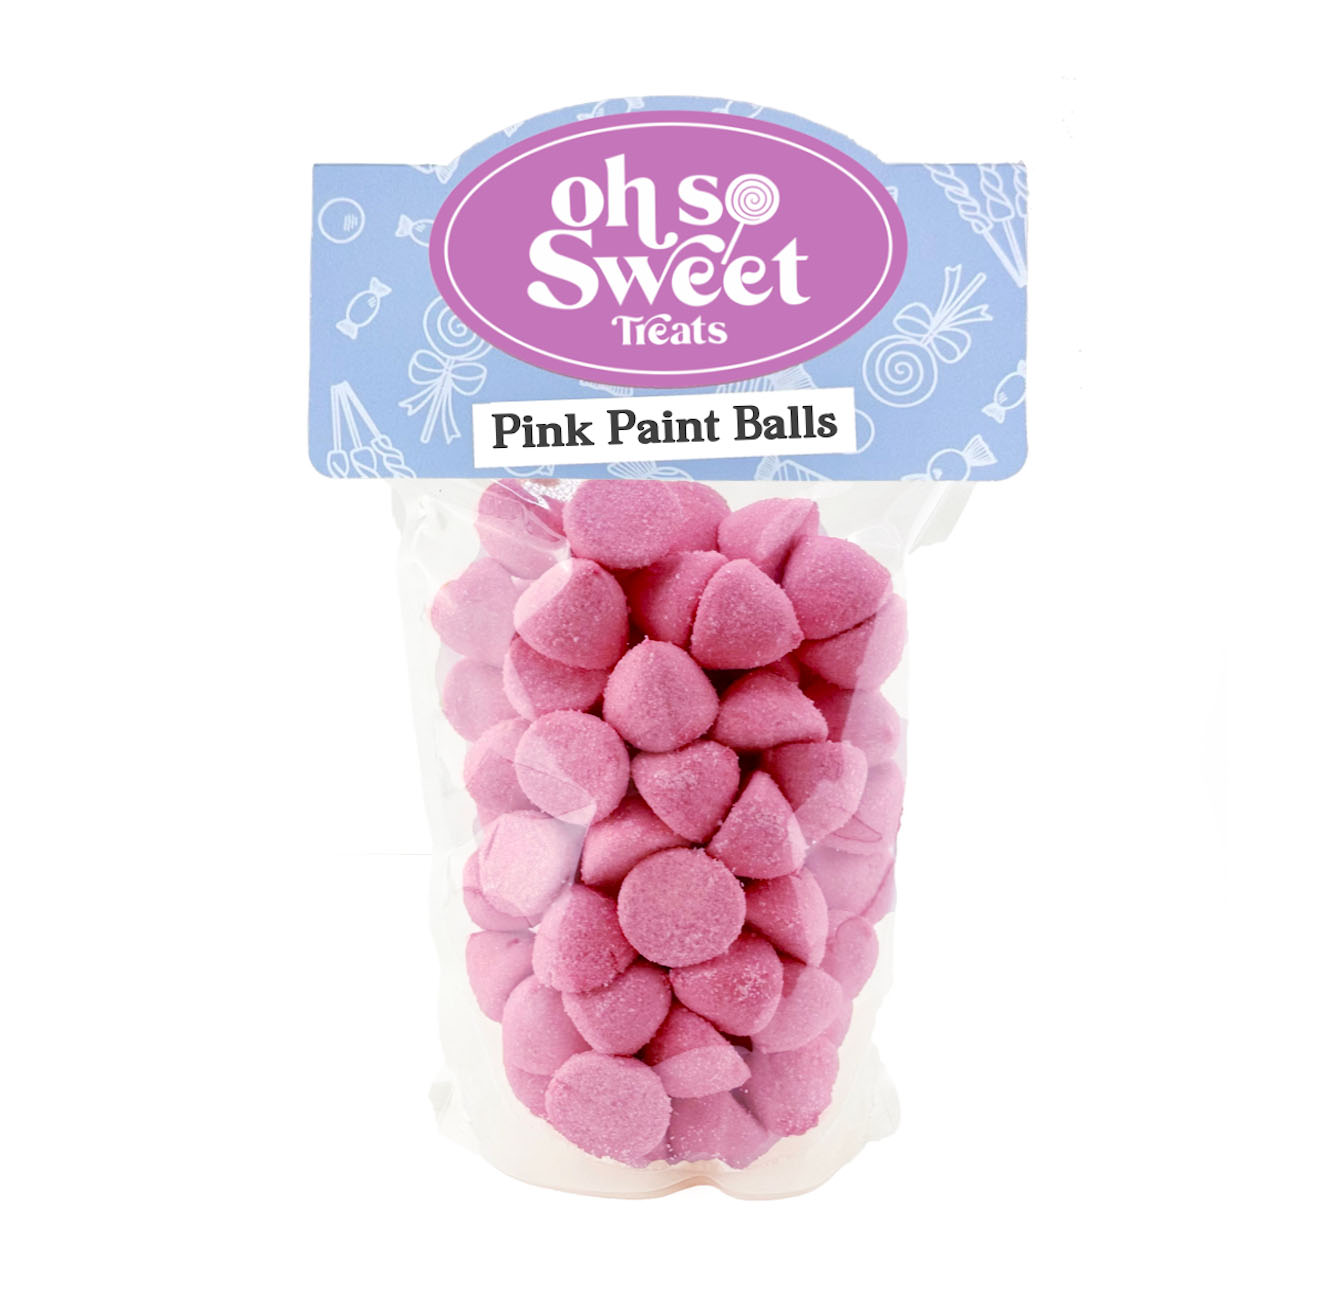 Pink Paint Balls